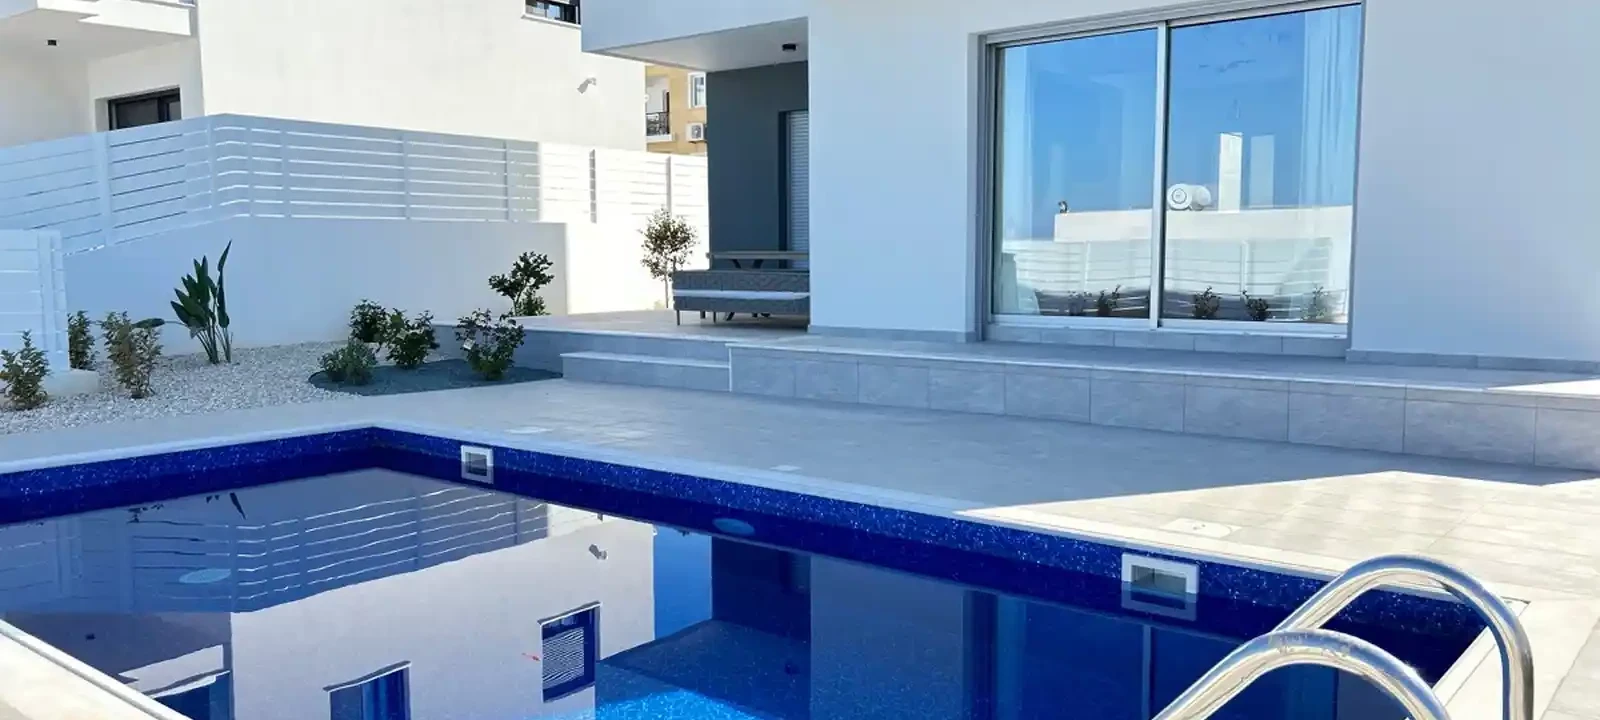 3-bedroom villa fоr sаle €840.000, image 1